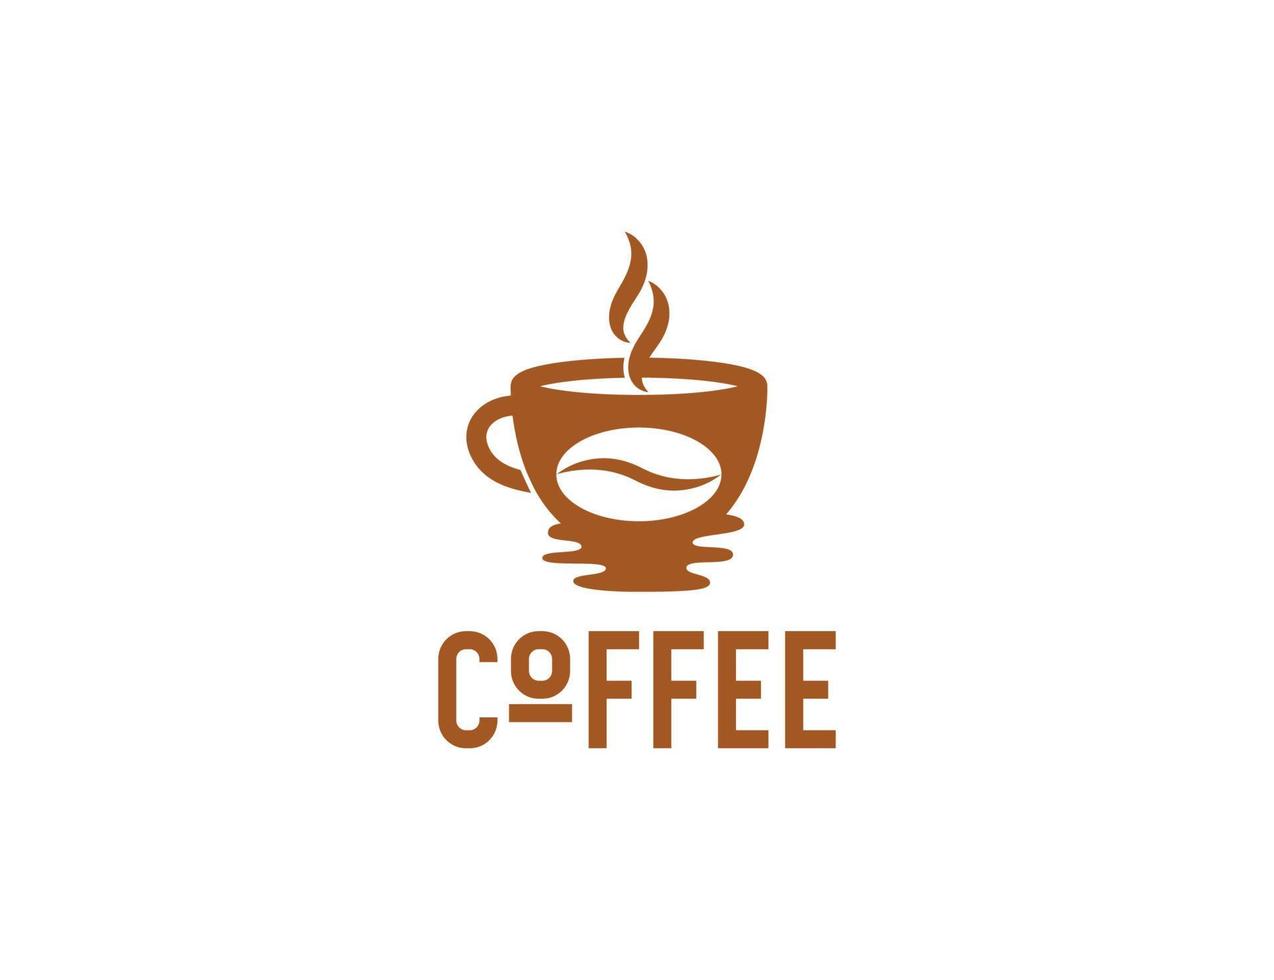 Hot coffee drink logo with mug illustration vector